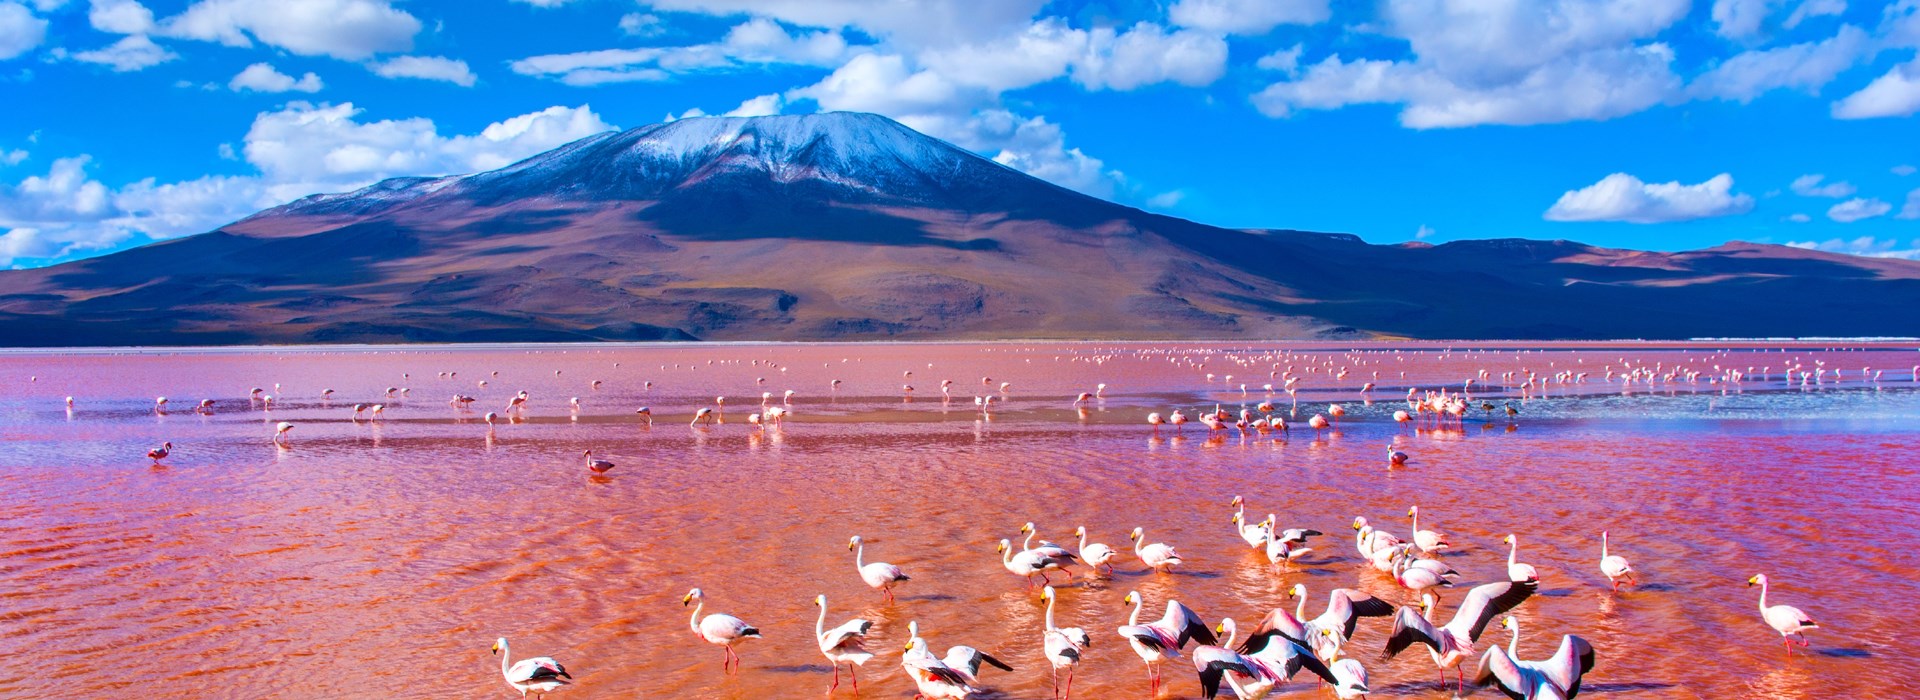 Visiter La Laguna Colorada - Bolivie